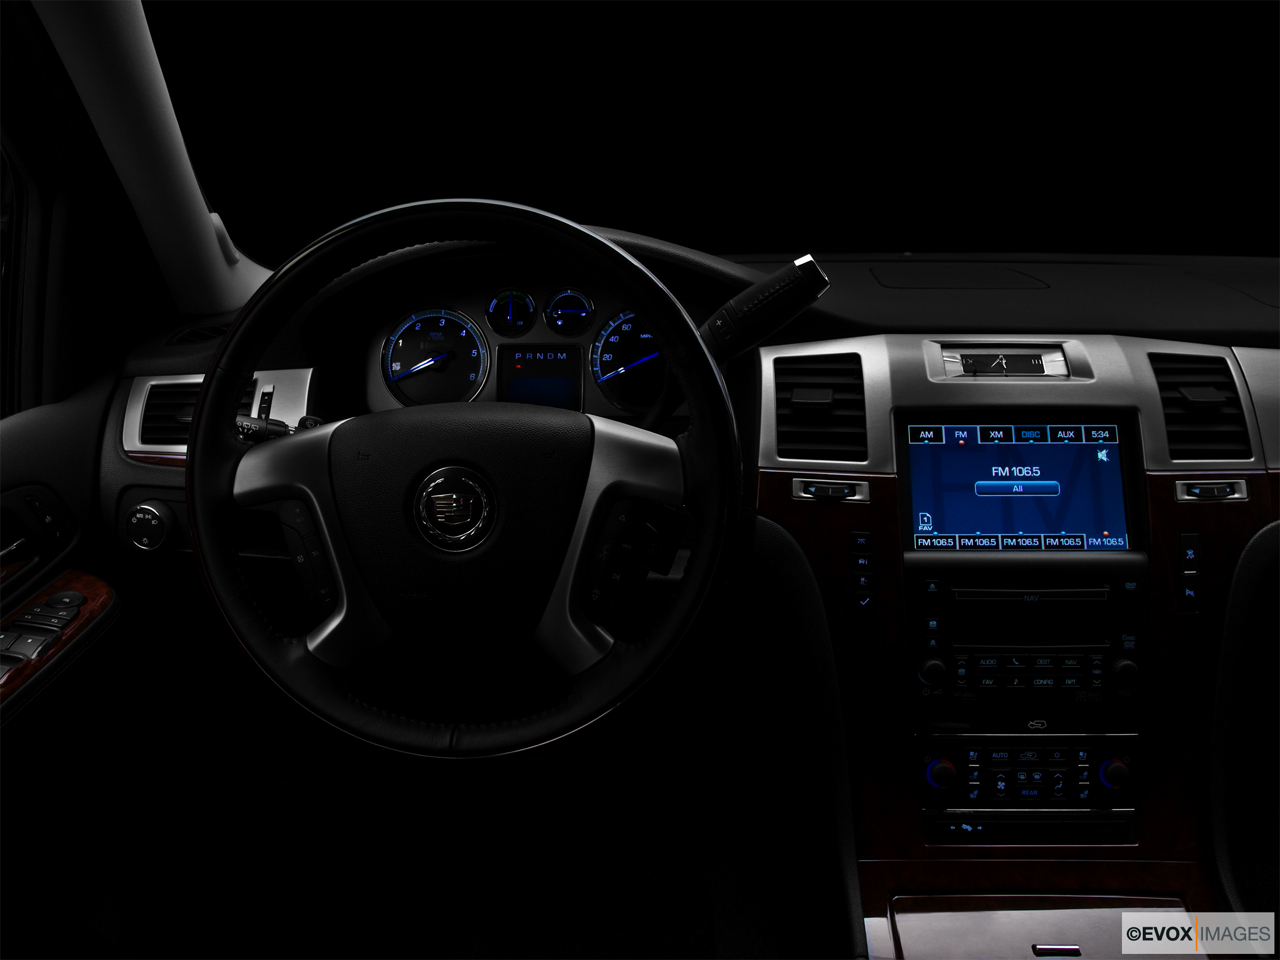 2010 Cadillac Escalade Hybrid Base Centered wide dash shot - "night" shot. 